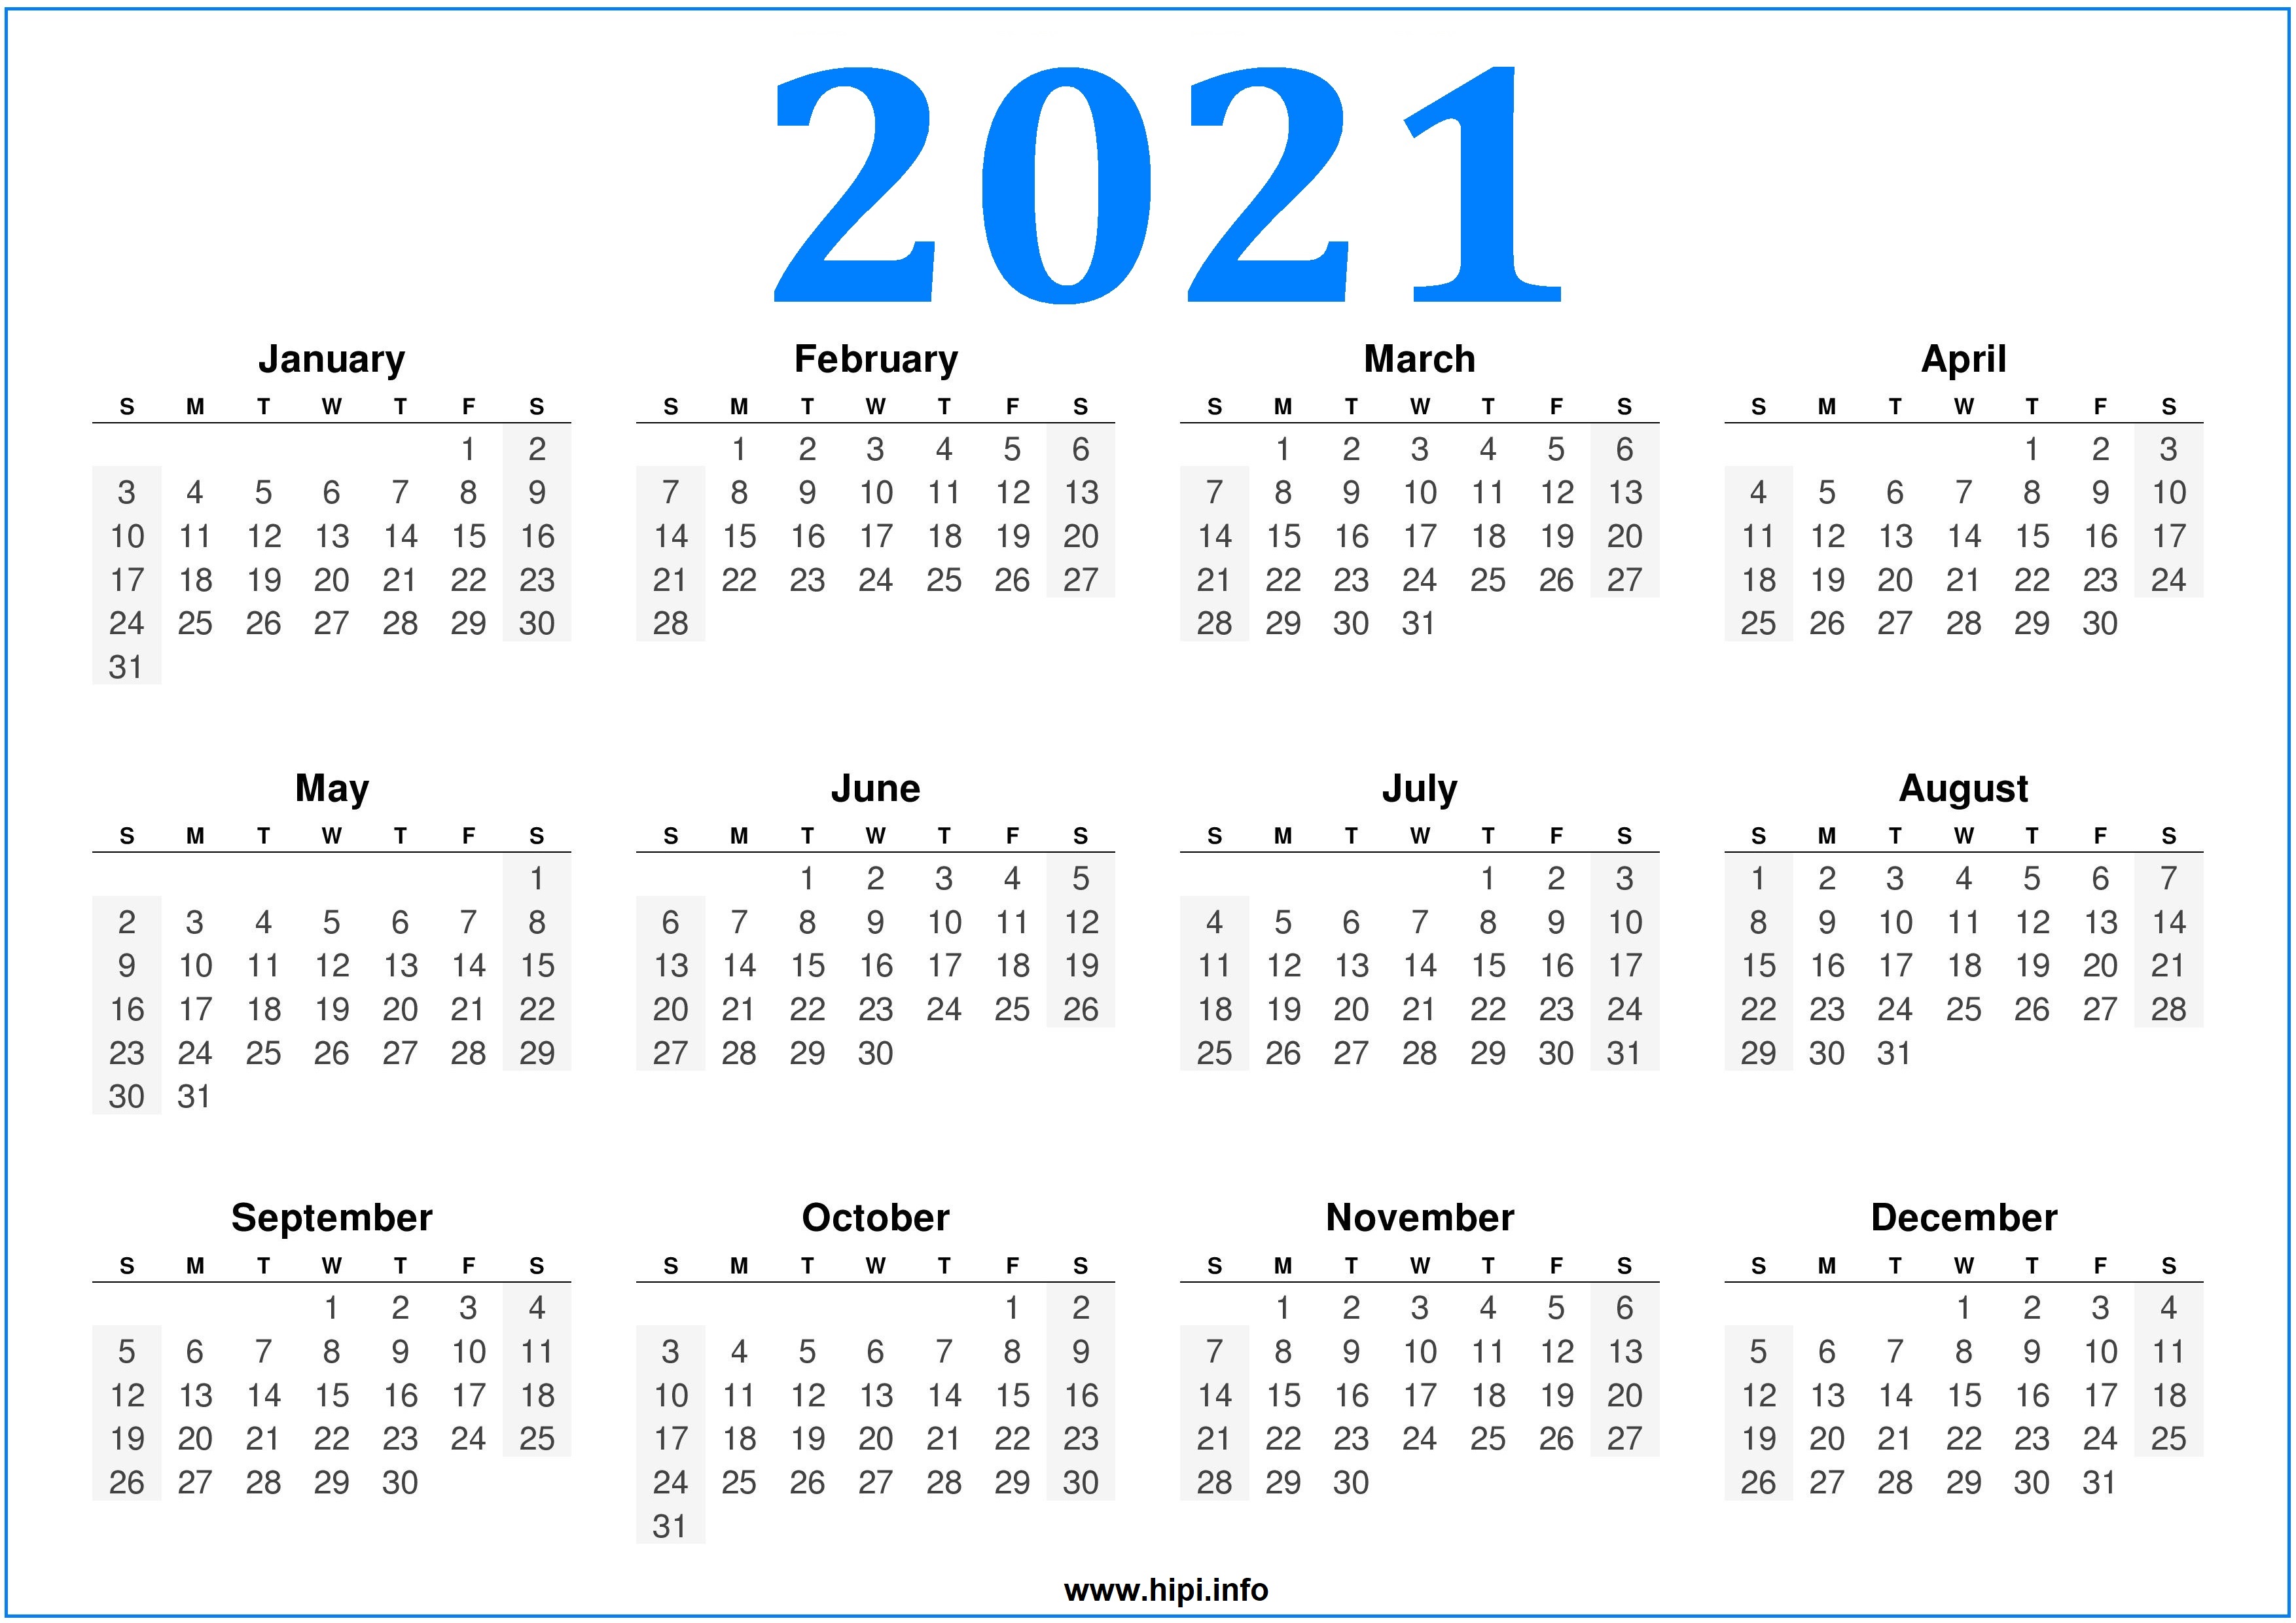 2021 Calendar Printable Free - Free Download - Hipi.info ...